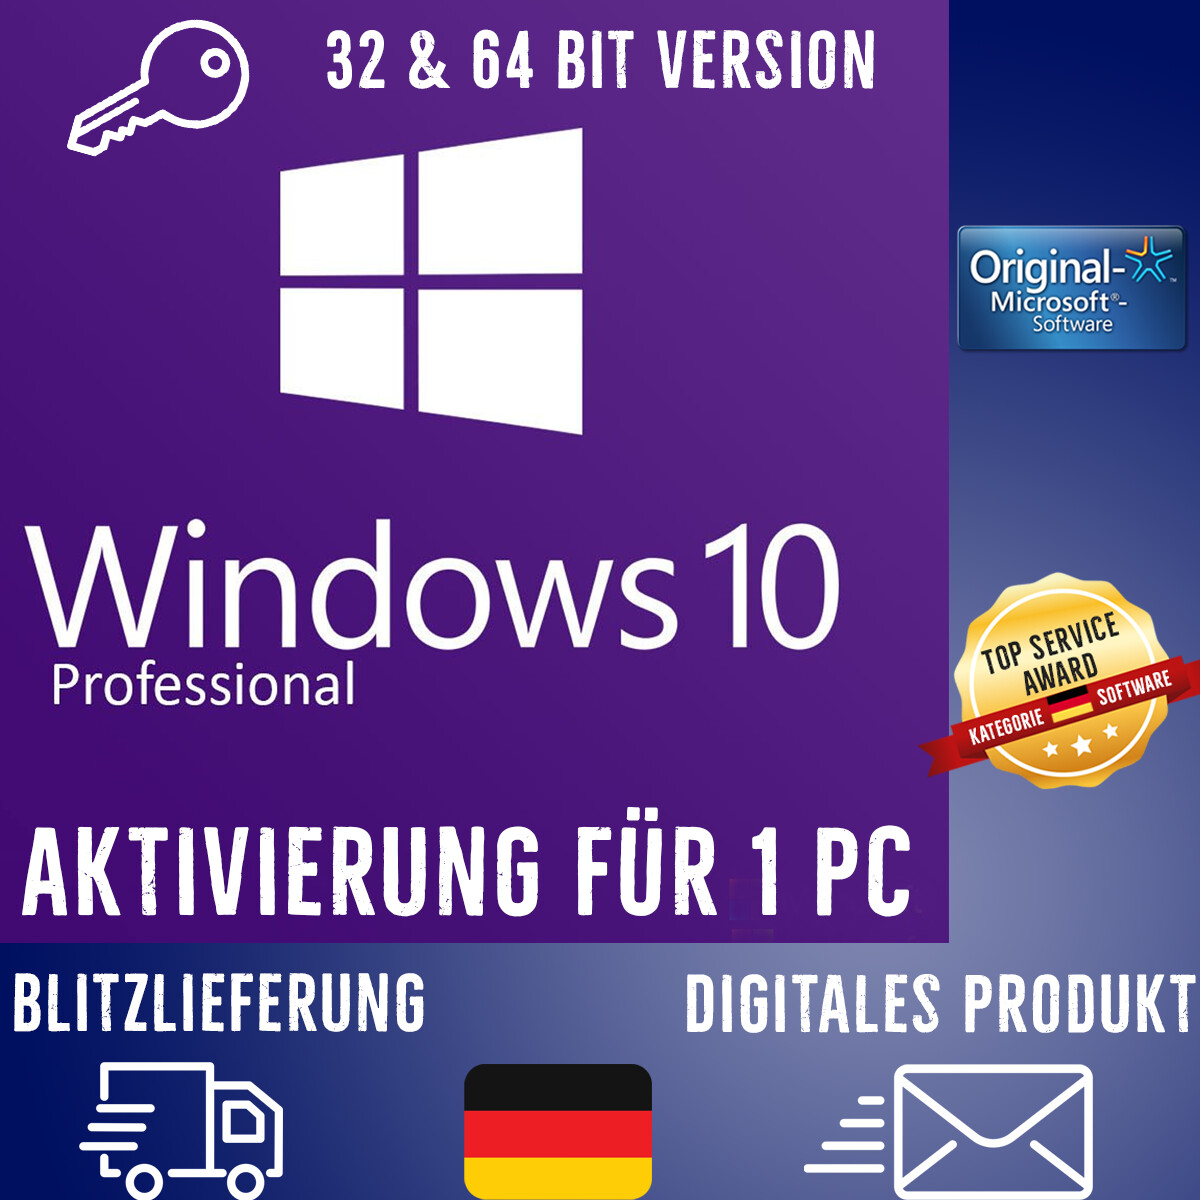 Windows 10 Professional 32/64 Bits Product Key - Win 10 Pro OEM Lizenzschlüssel